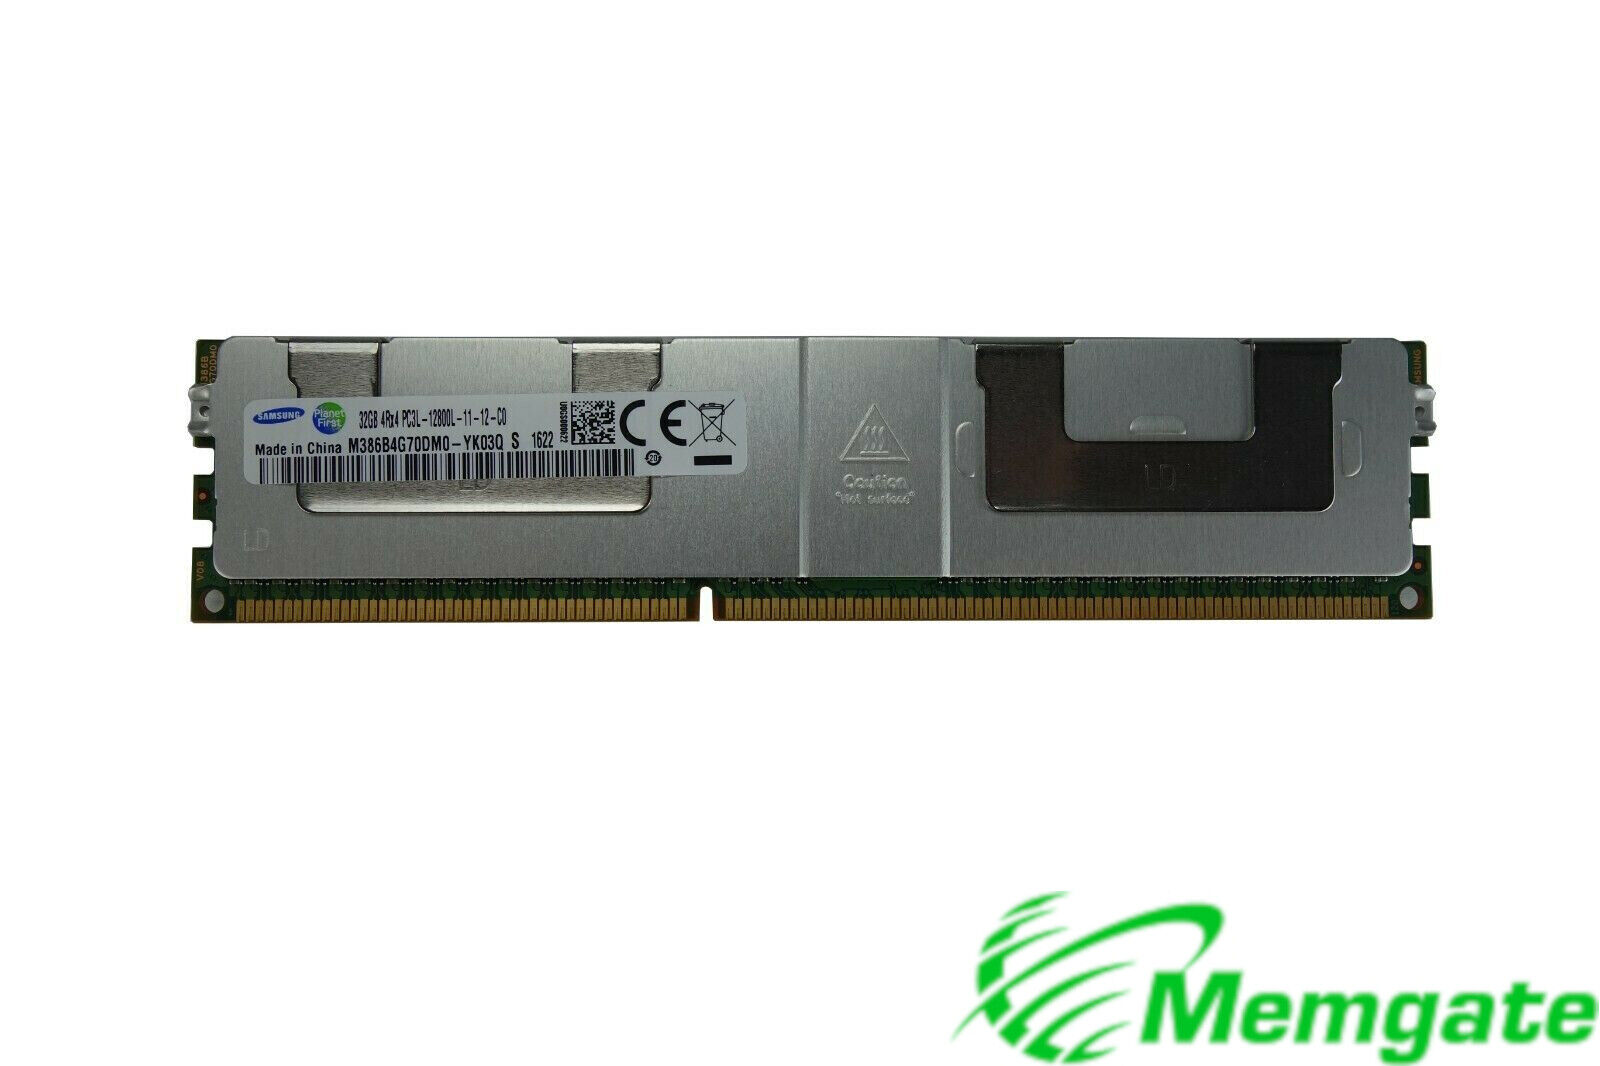 256GB (8x32GB) DDR3 1333 PC3L-10600L LRDIMMs Load Reduced Memory for Dell R620 